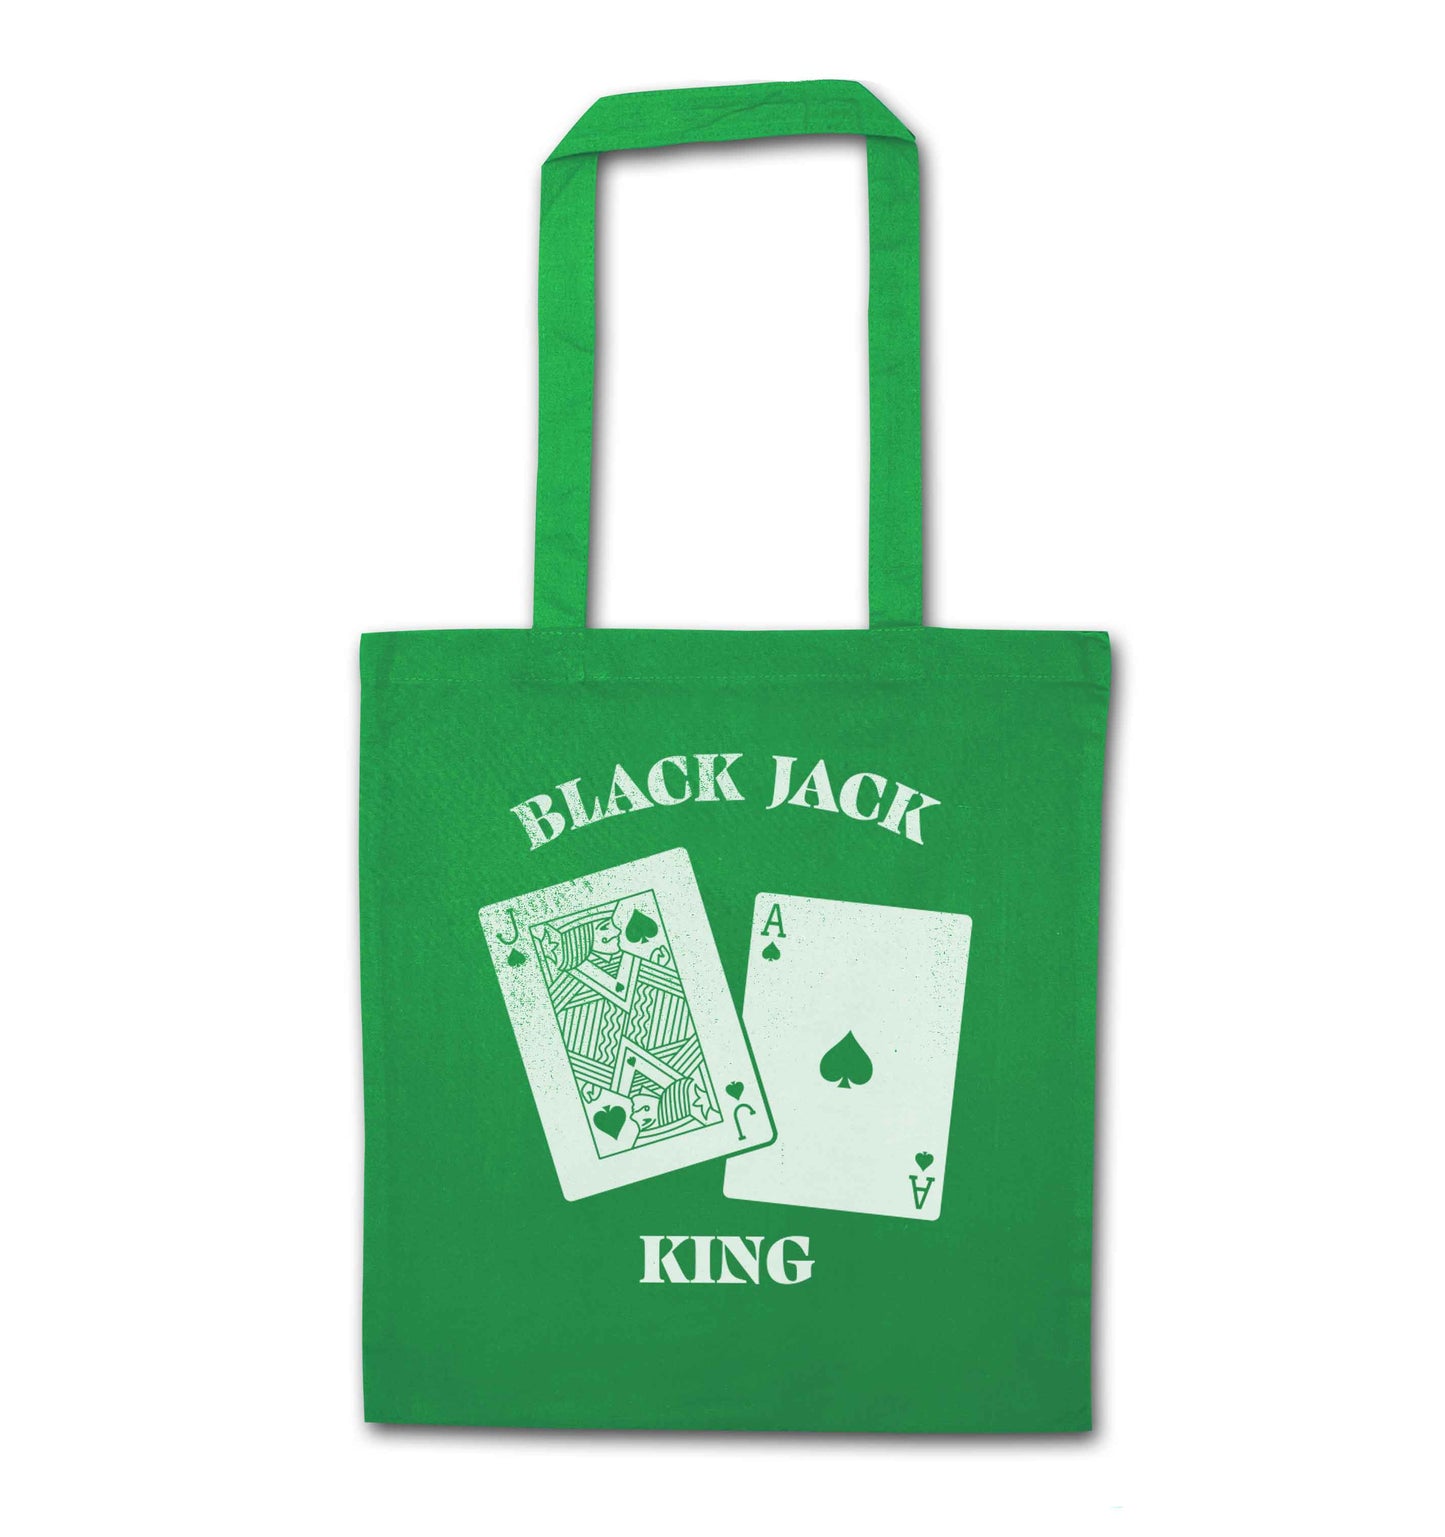 Blackjack king green tote bag